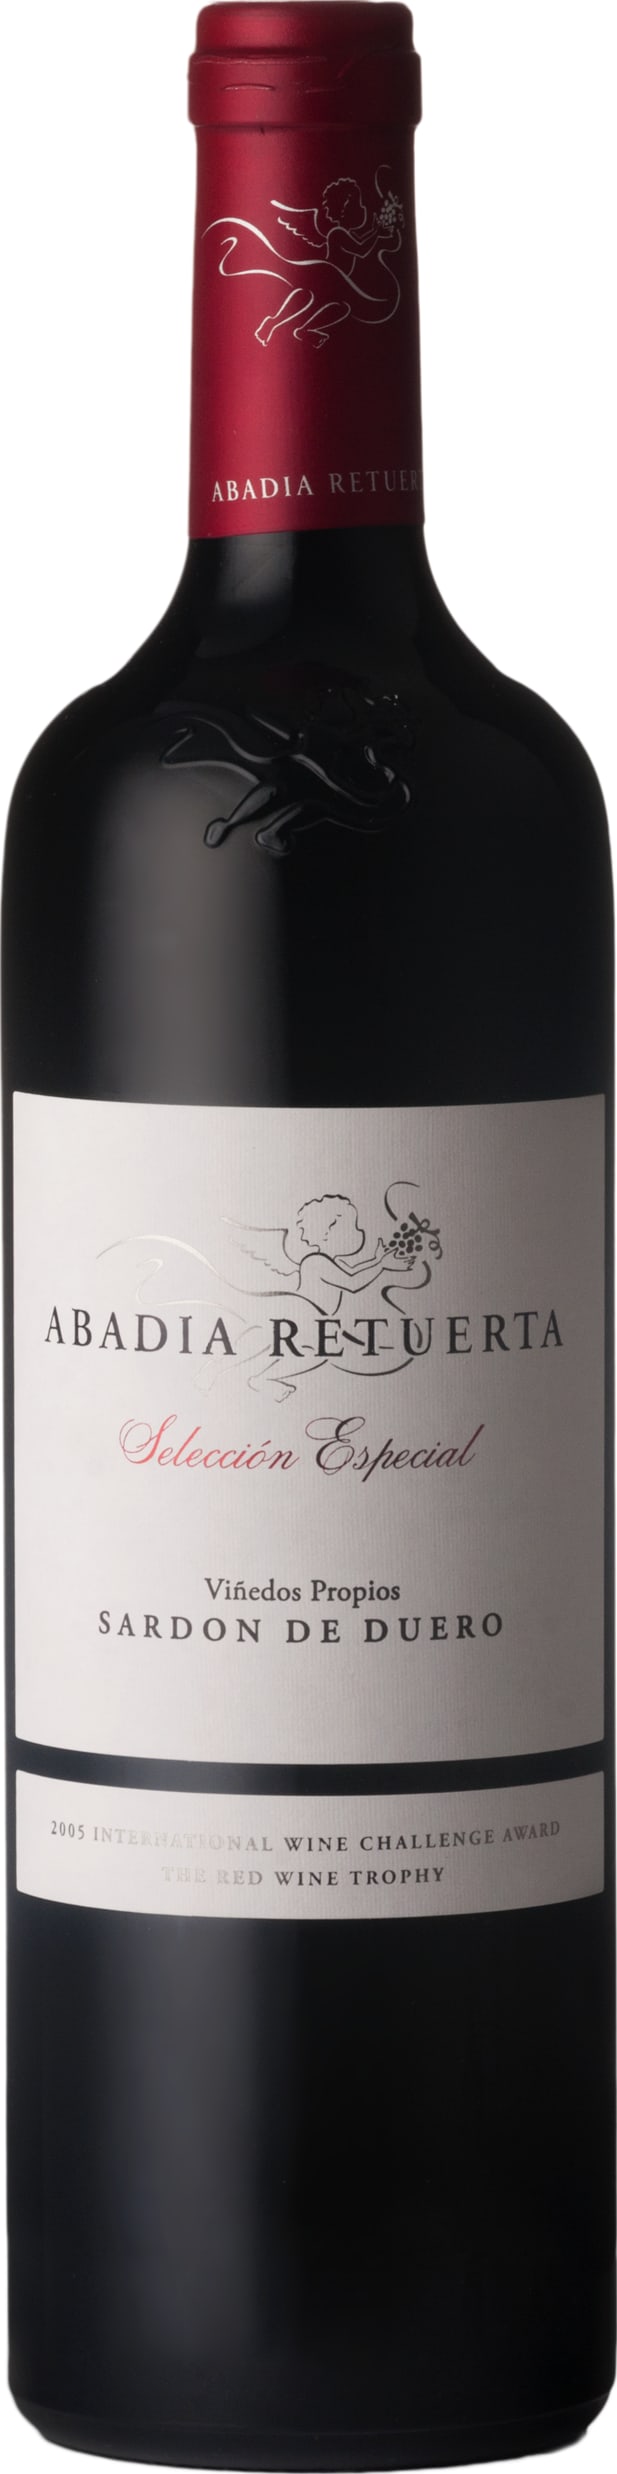 Abadia Retuerta Cellar Release Seleccion Especial 2011 75cl - Buy Abadia Retuerta Wines from GREAT WINES DIRECT wine shop